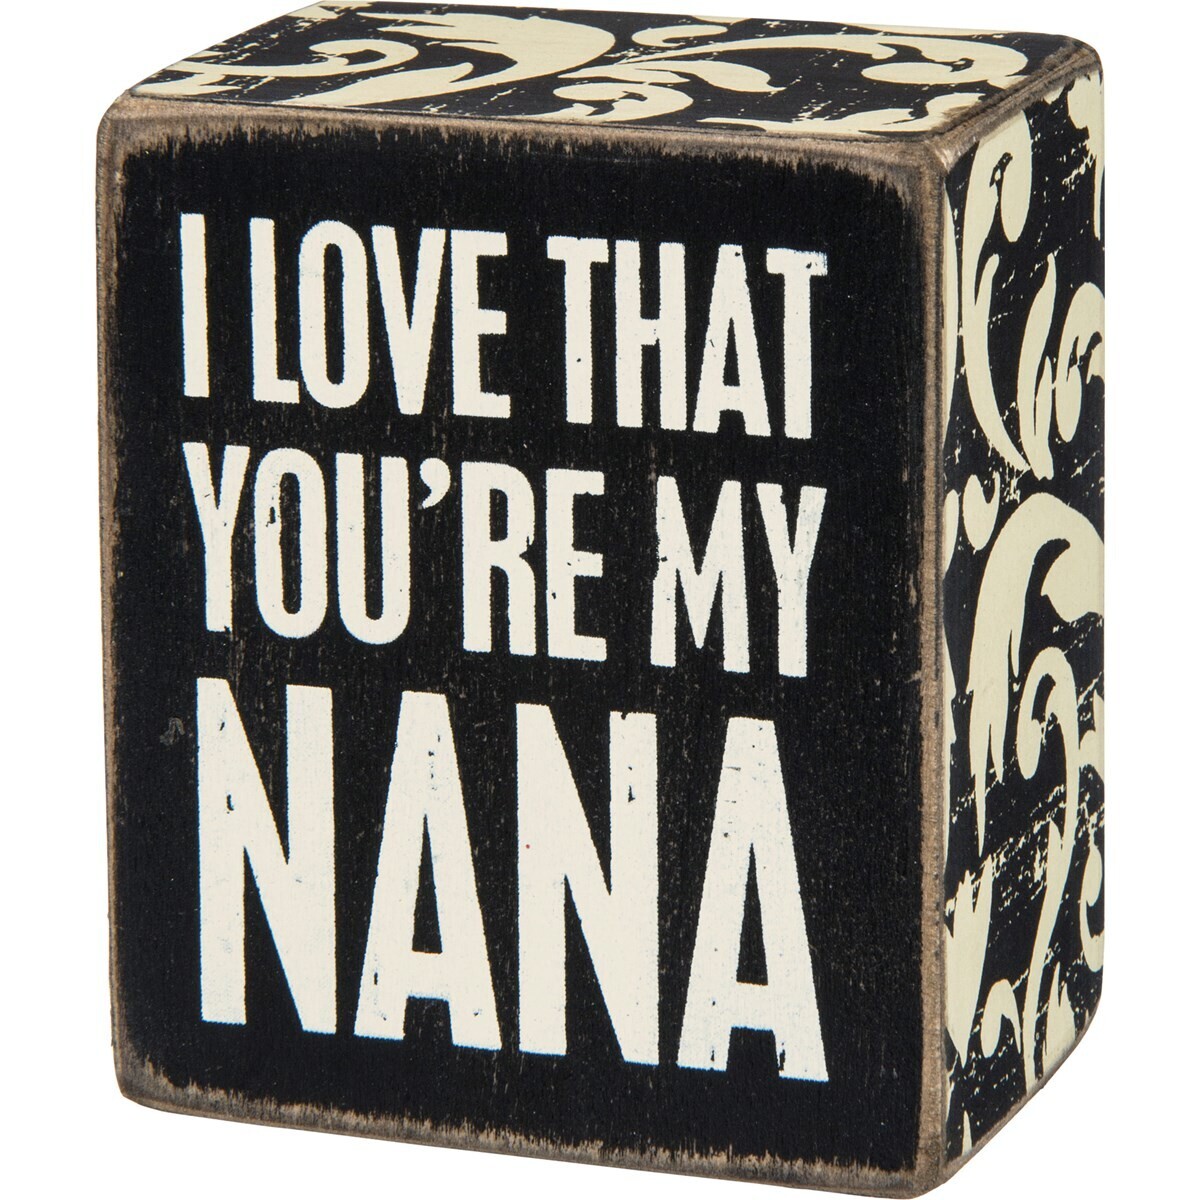 My Nana Box Sign